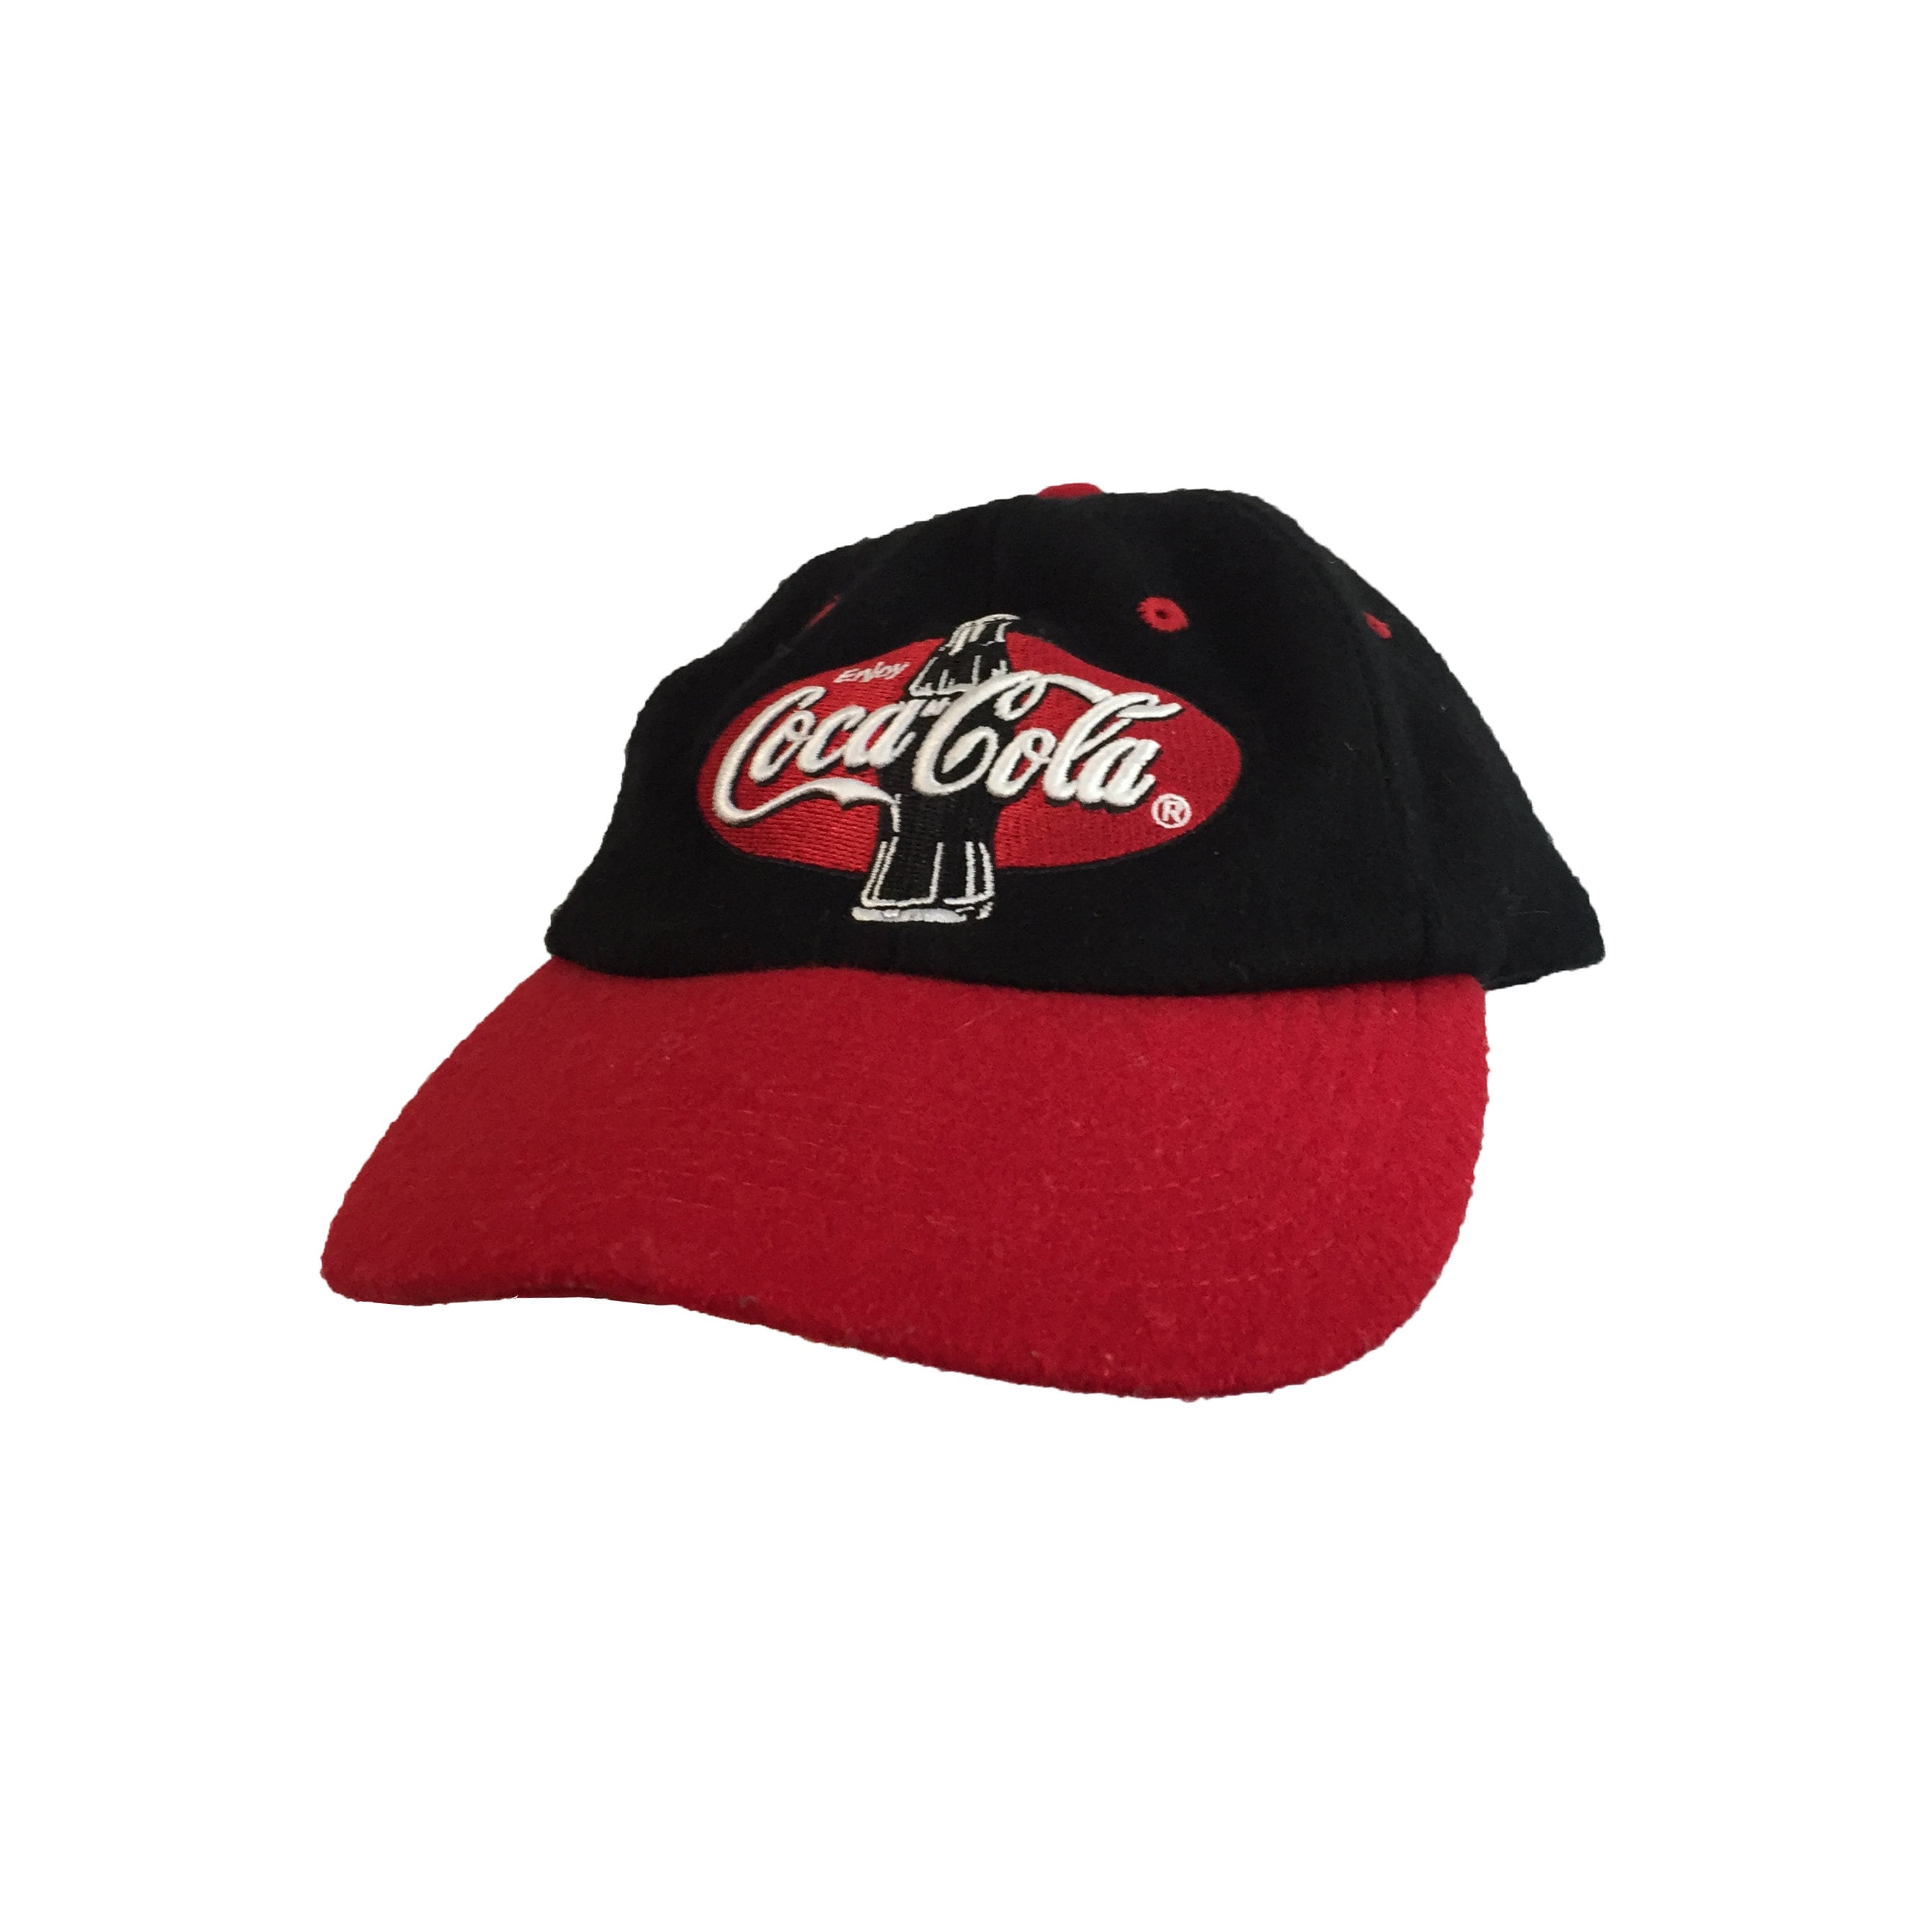 90's Enjoy Coca-Cola Orange Blaze Camo Snap Back Trucker Hat Men's OSFM!